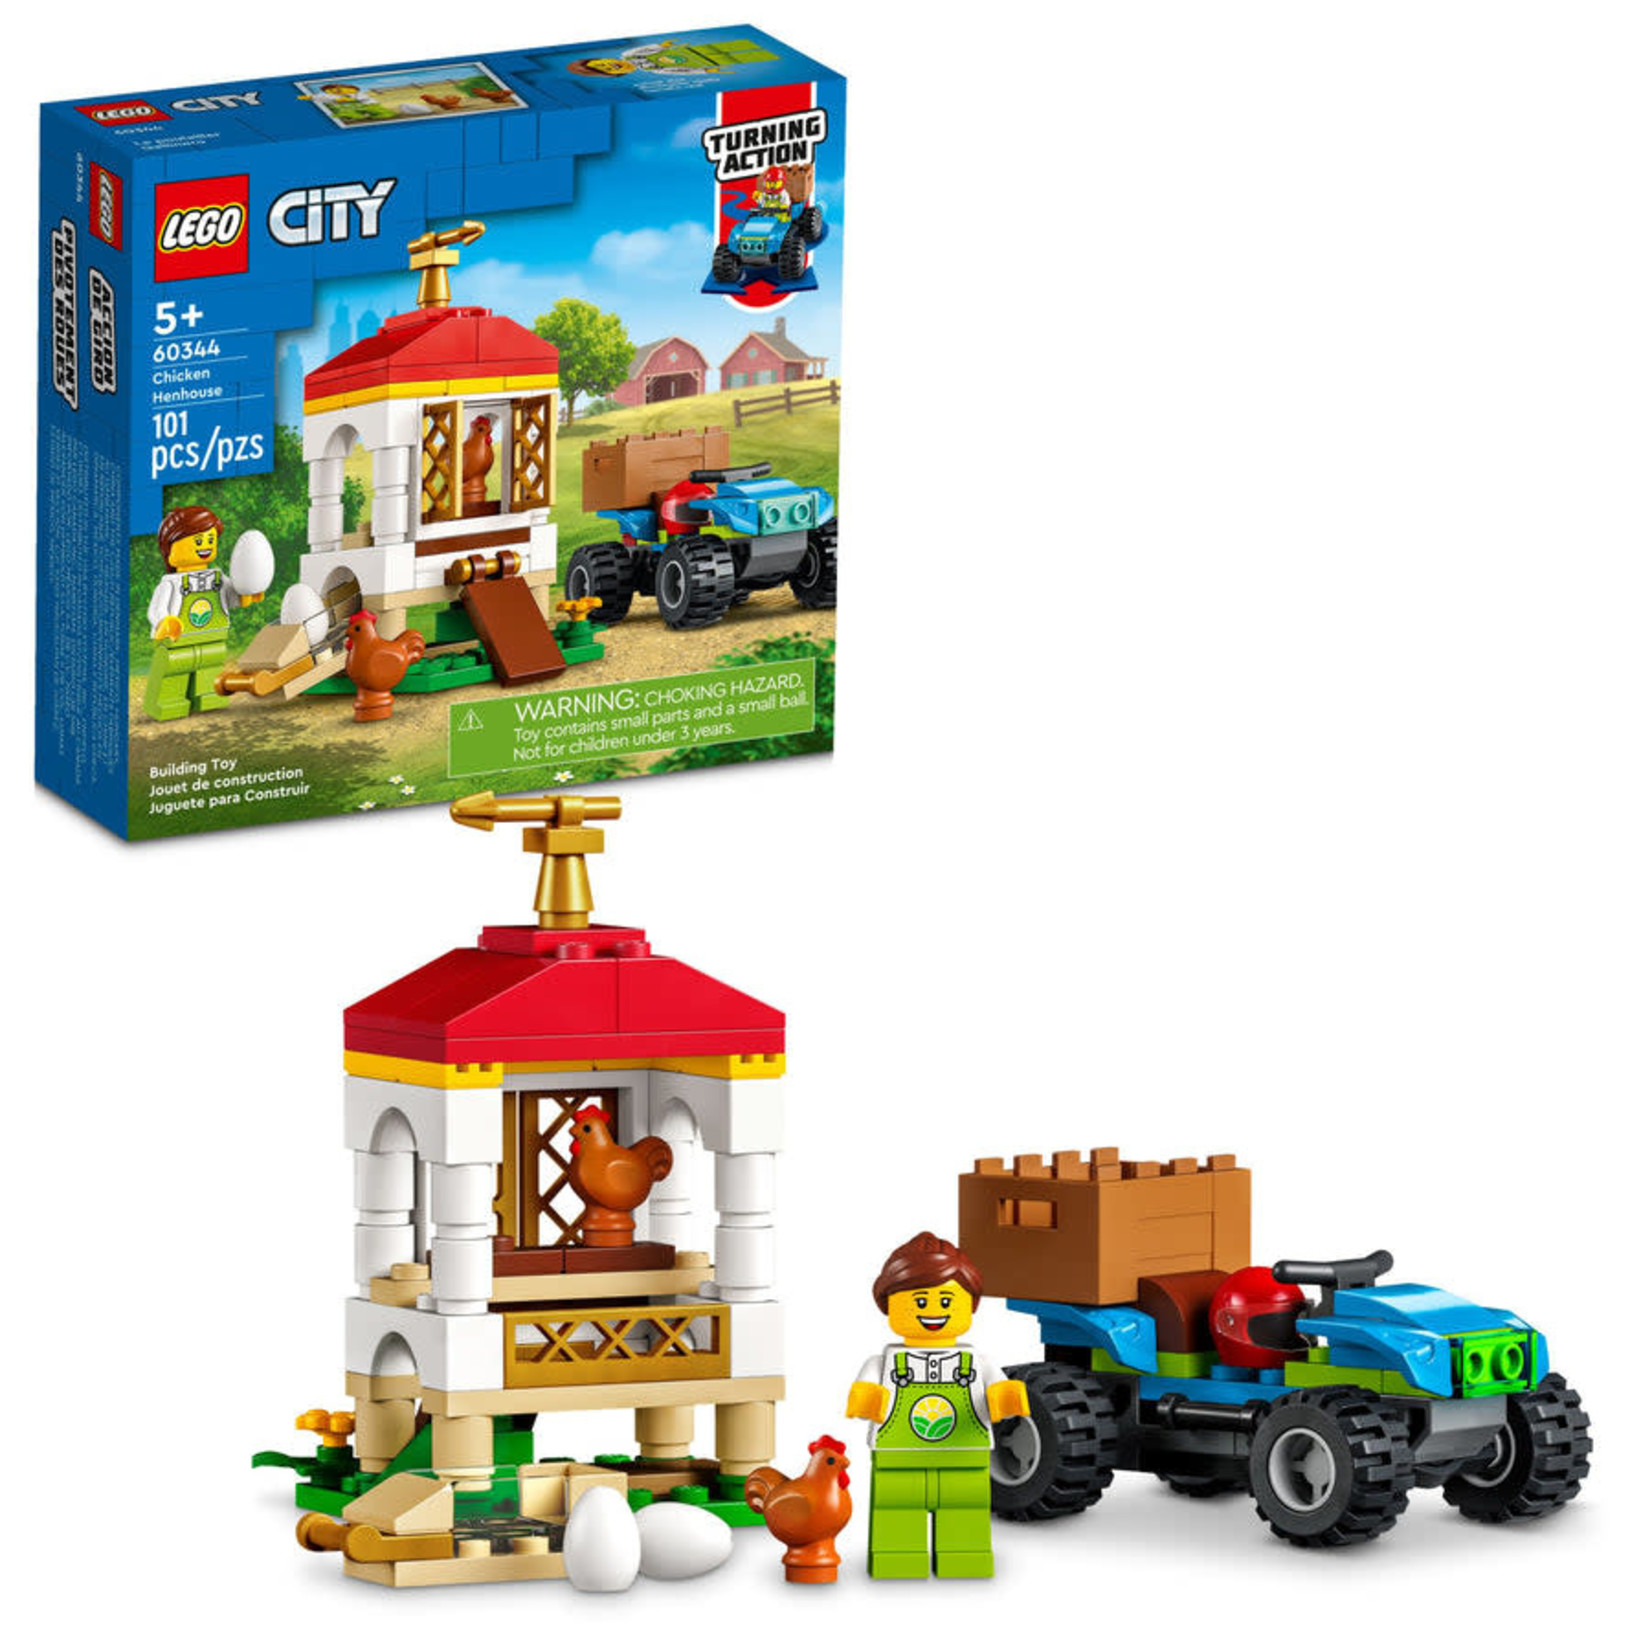 LEGO 60344 LEGO® City Chicken Henhouse